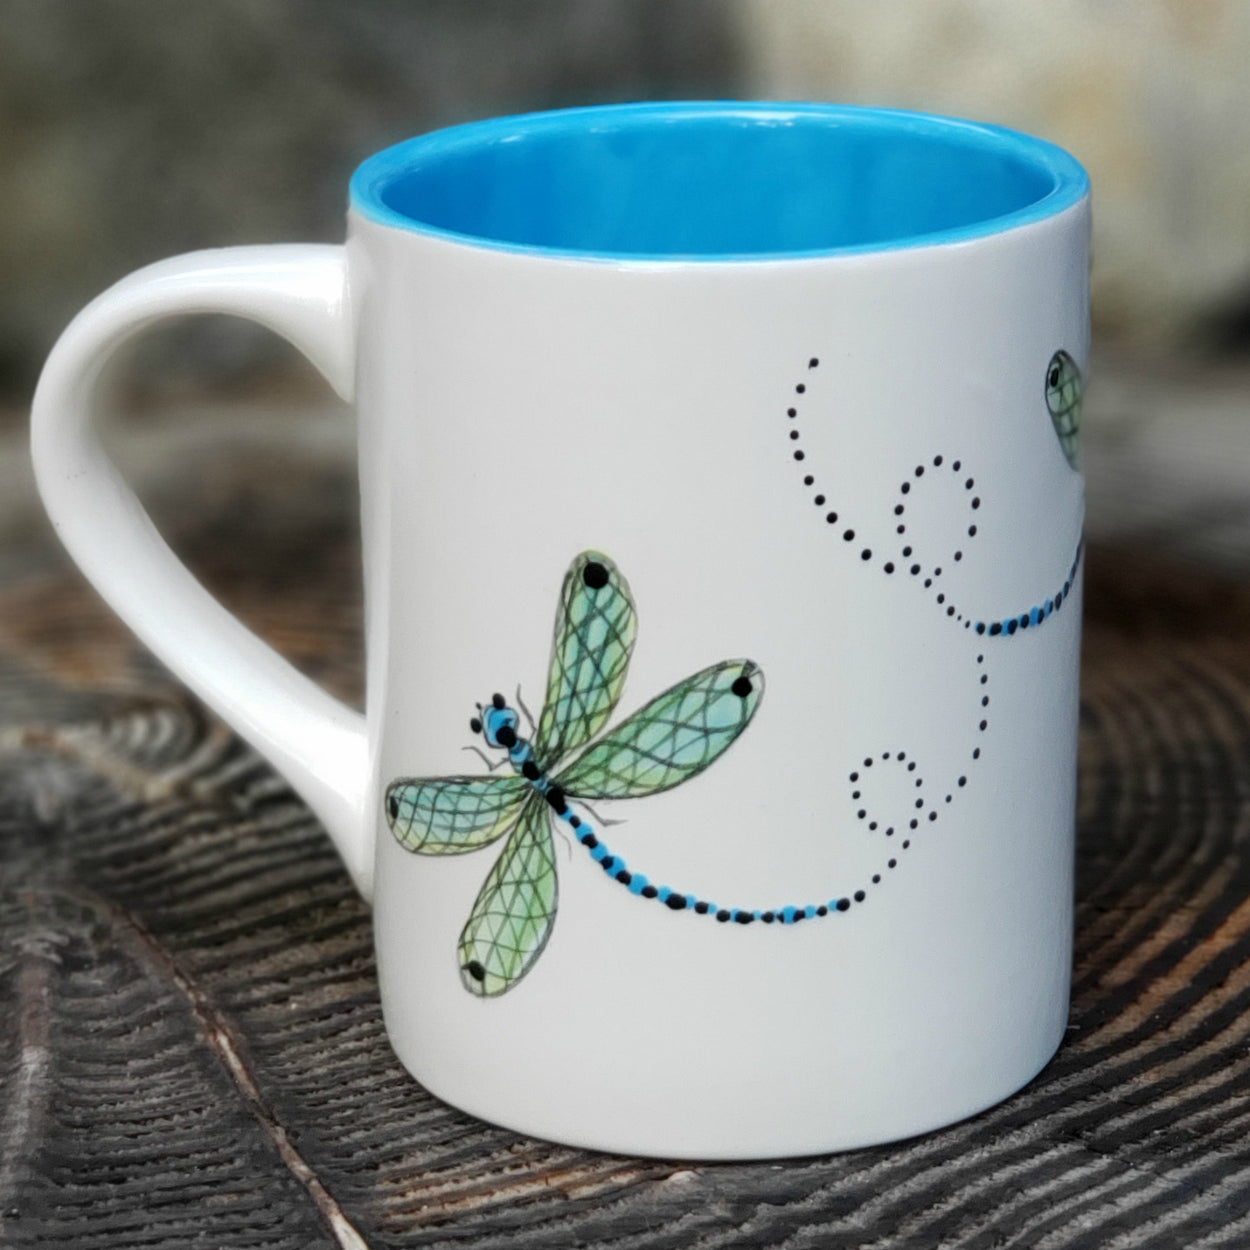 Hand painted mug with Dragonflies swirling around the mug. The inside is glazed in a beautiful bright aqua... 16 oz kiln fried ceramic mug